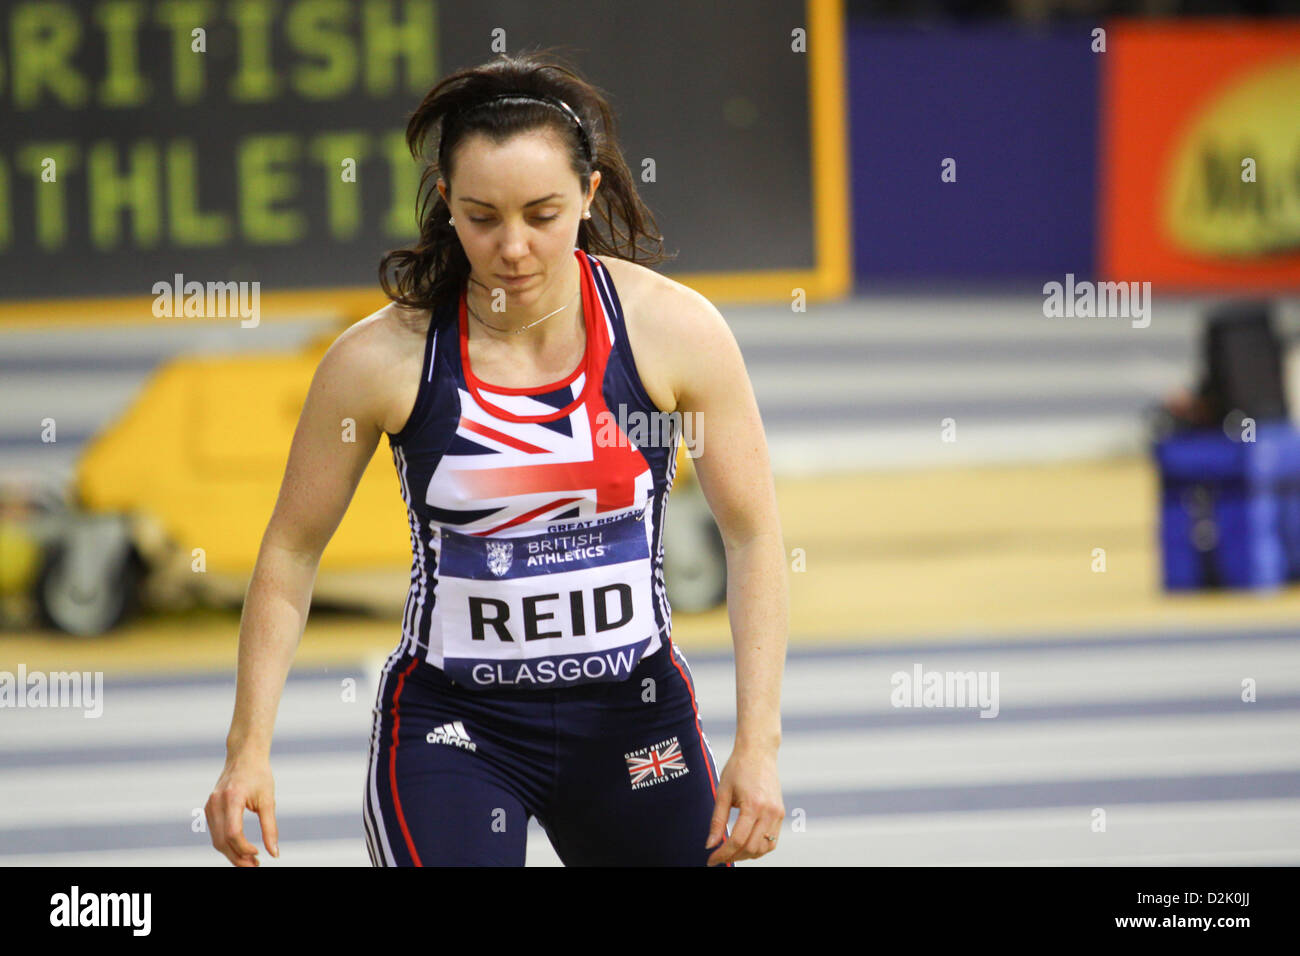 Glasgow, UK. 26th Jan, 2013. Stefanie Reid winner 1st women's long jump F44/46 Great Britain & N.I. - at the  British Athletics Glasgow International Match Emirates Arena Stock Photo